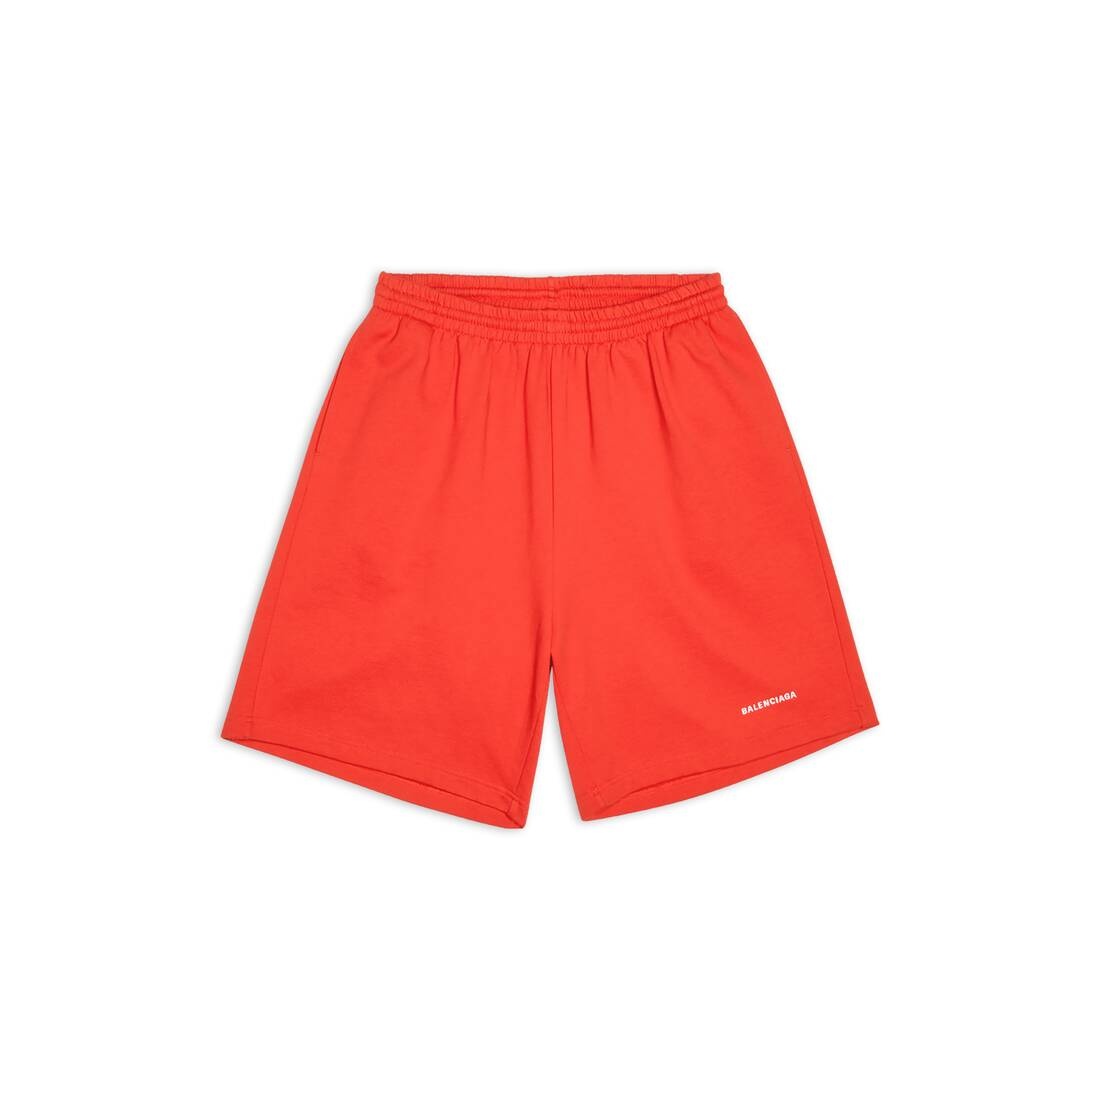 Women's Balenciaga Sweat Shorts in Red - 1